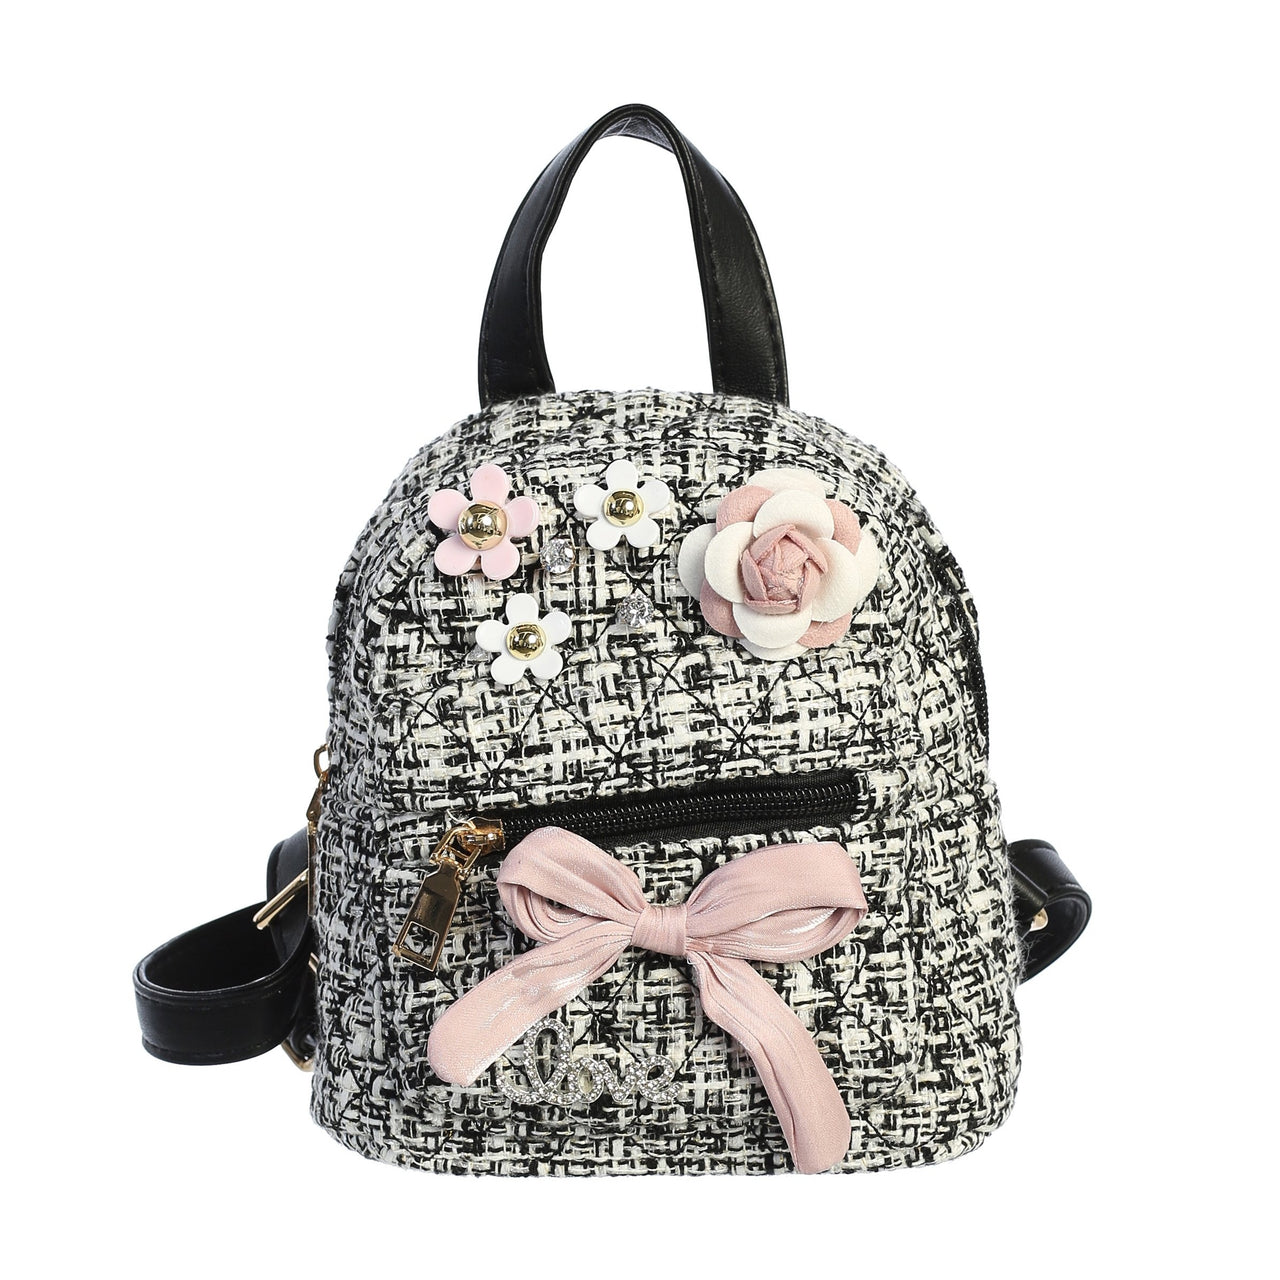 Small backpack - Black - Ladies | H&M IN